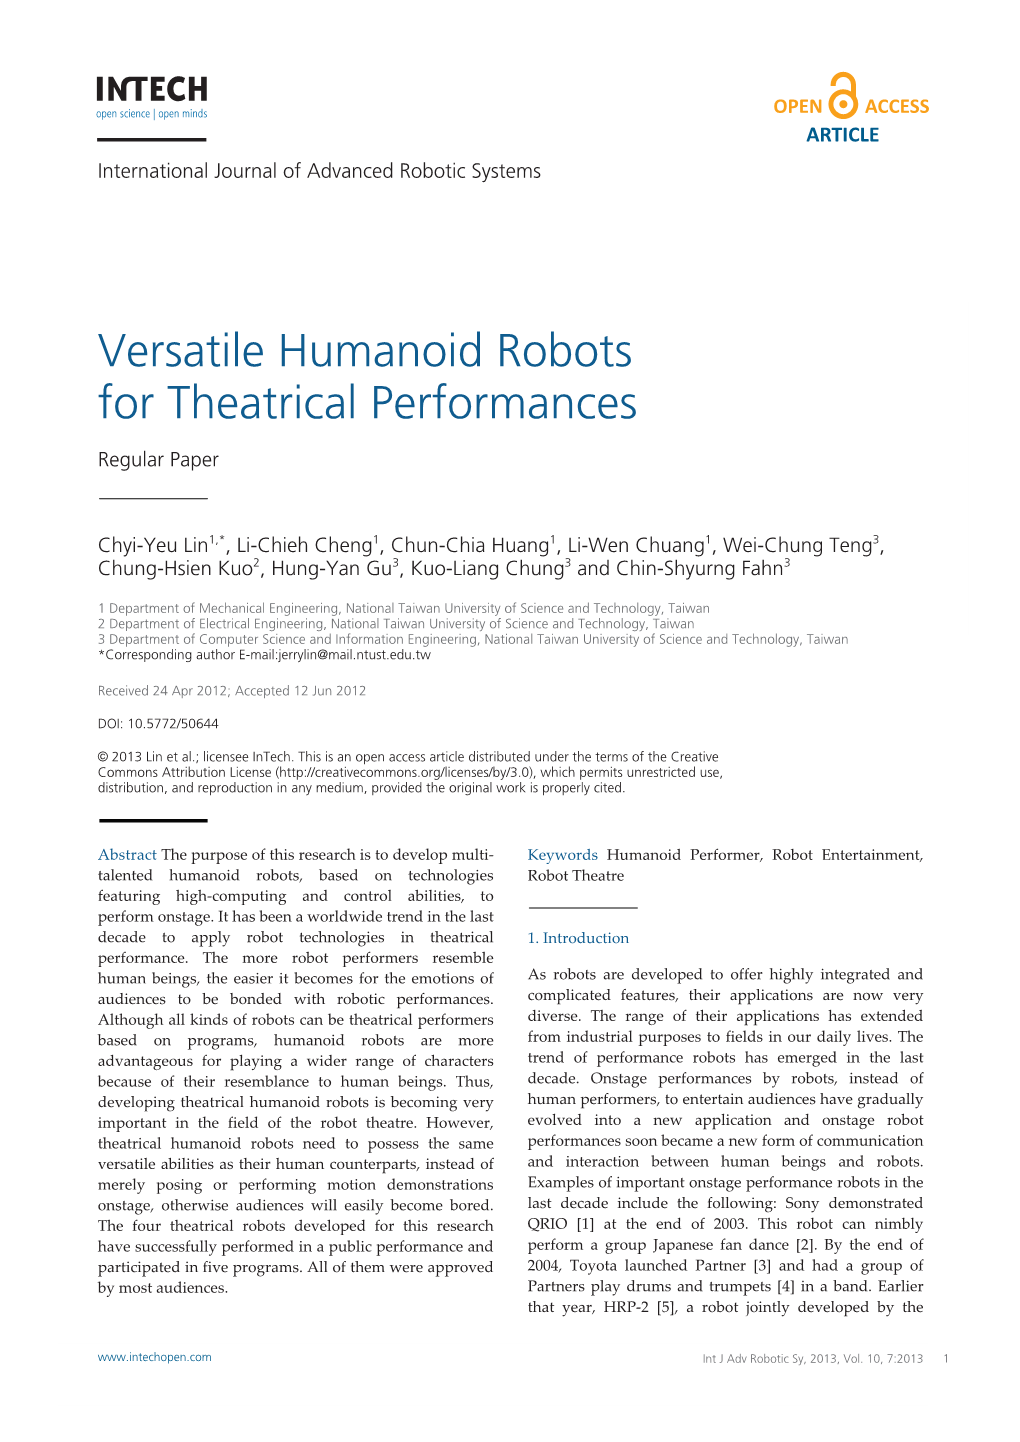 Versatile Humanoid Robots for Theatrical Performances